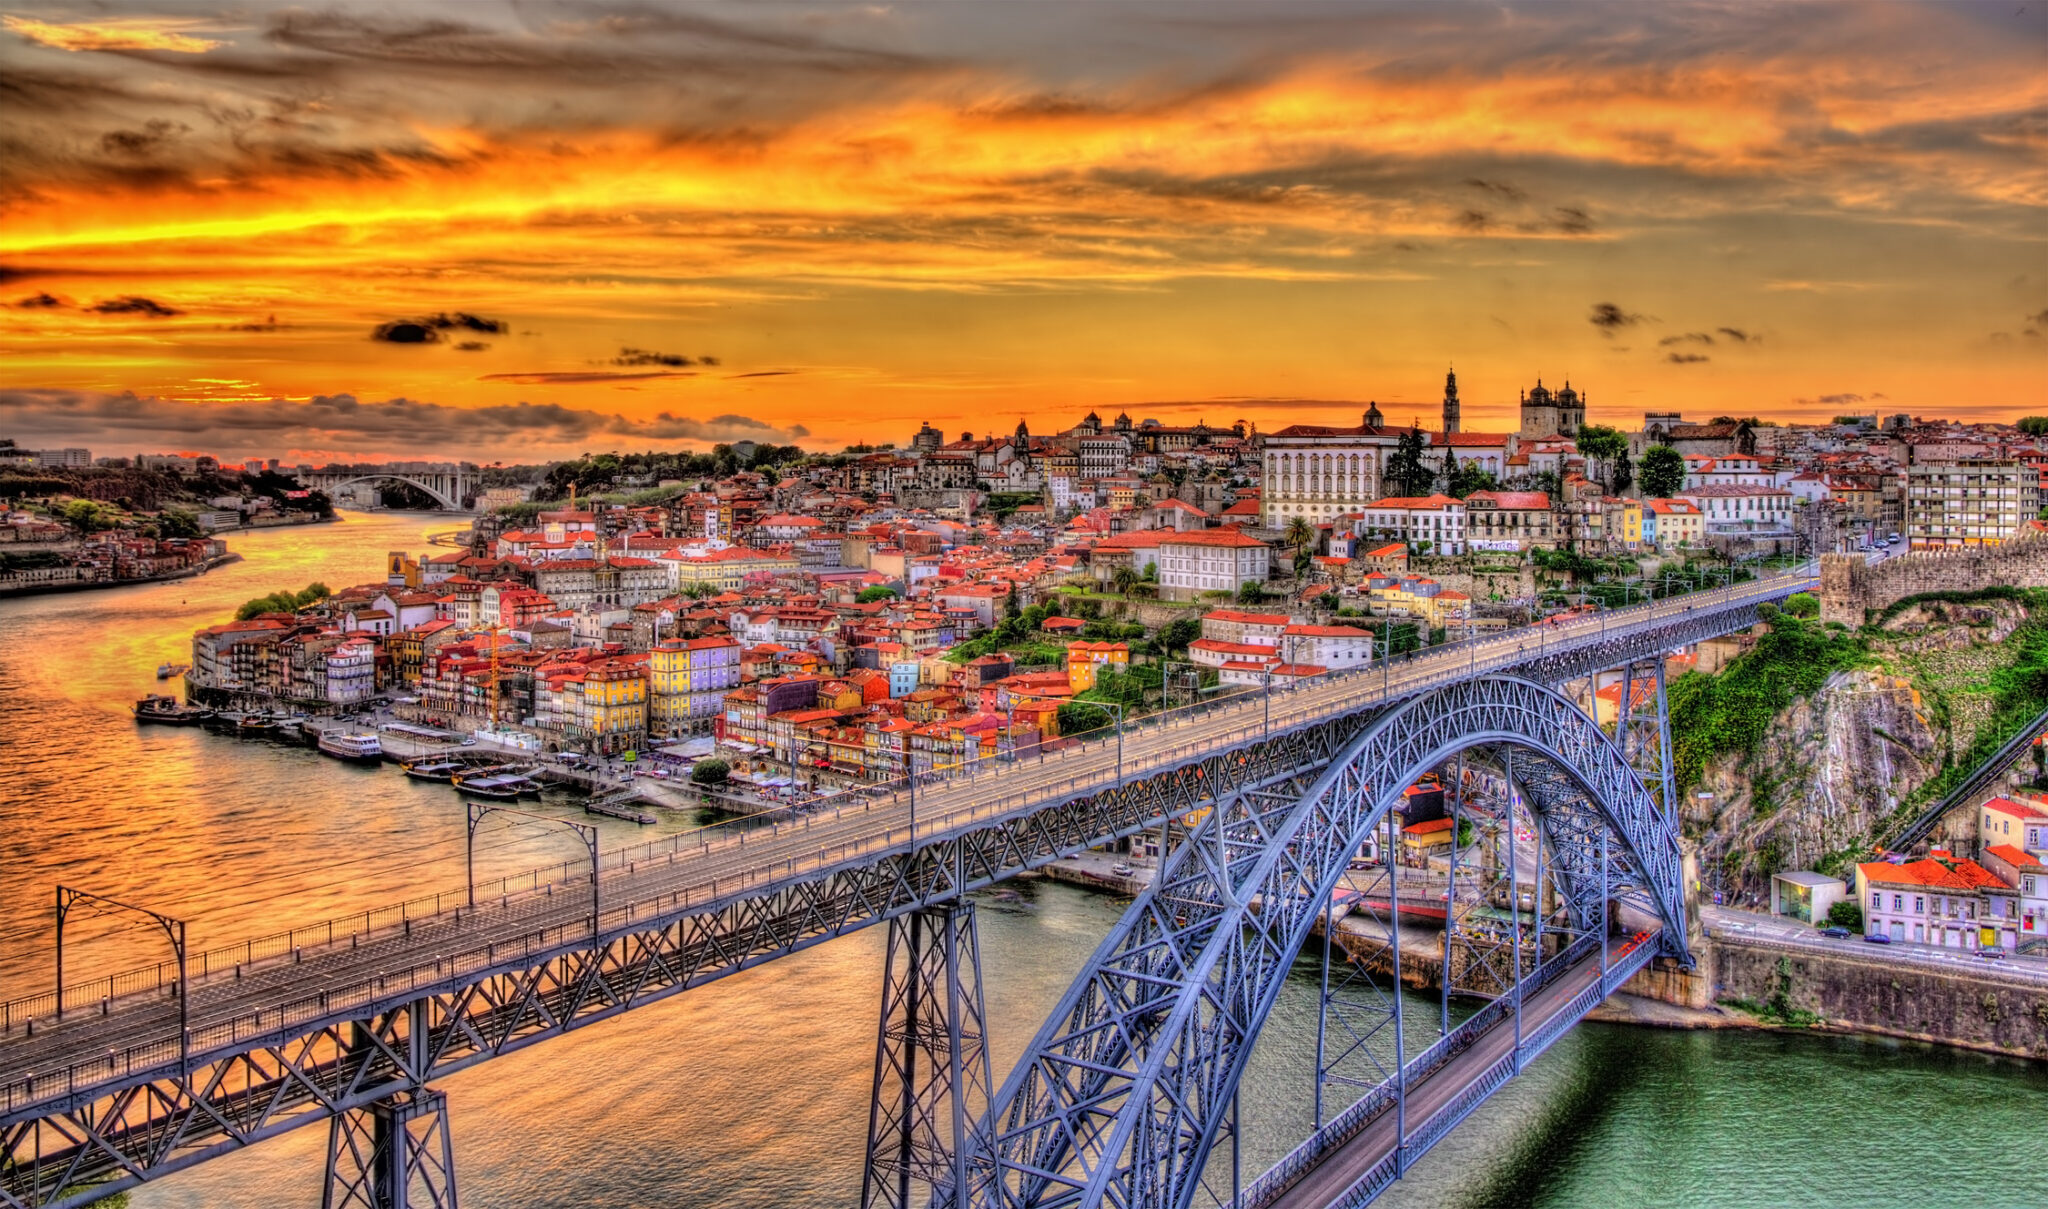 Португалия. Опорто Португалия. Город Порто. Знаменитый мост в Португалии. Порту Португалия центр города.